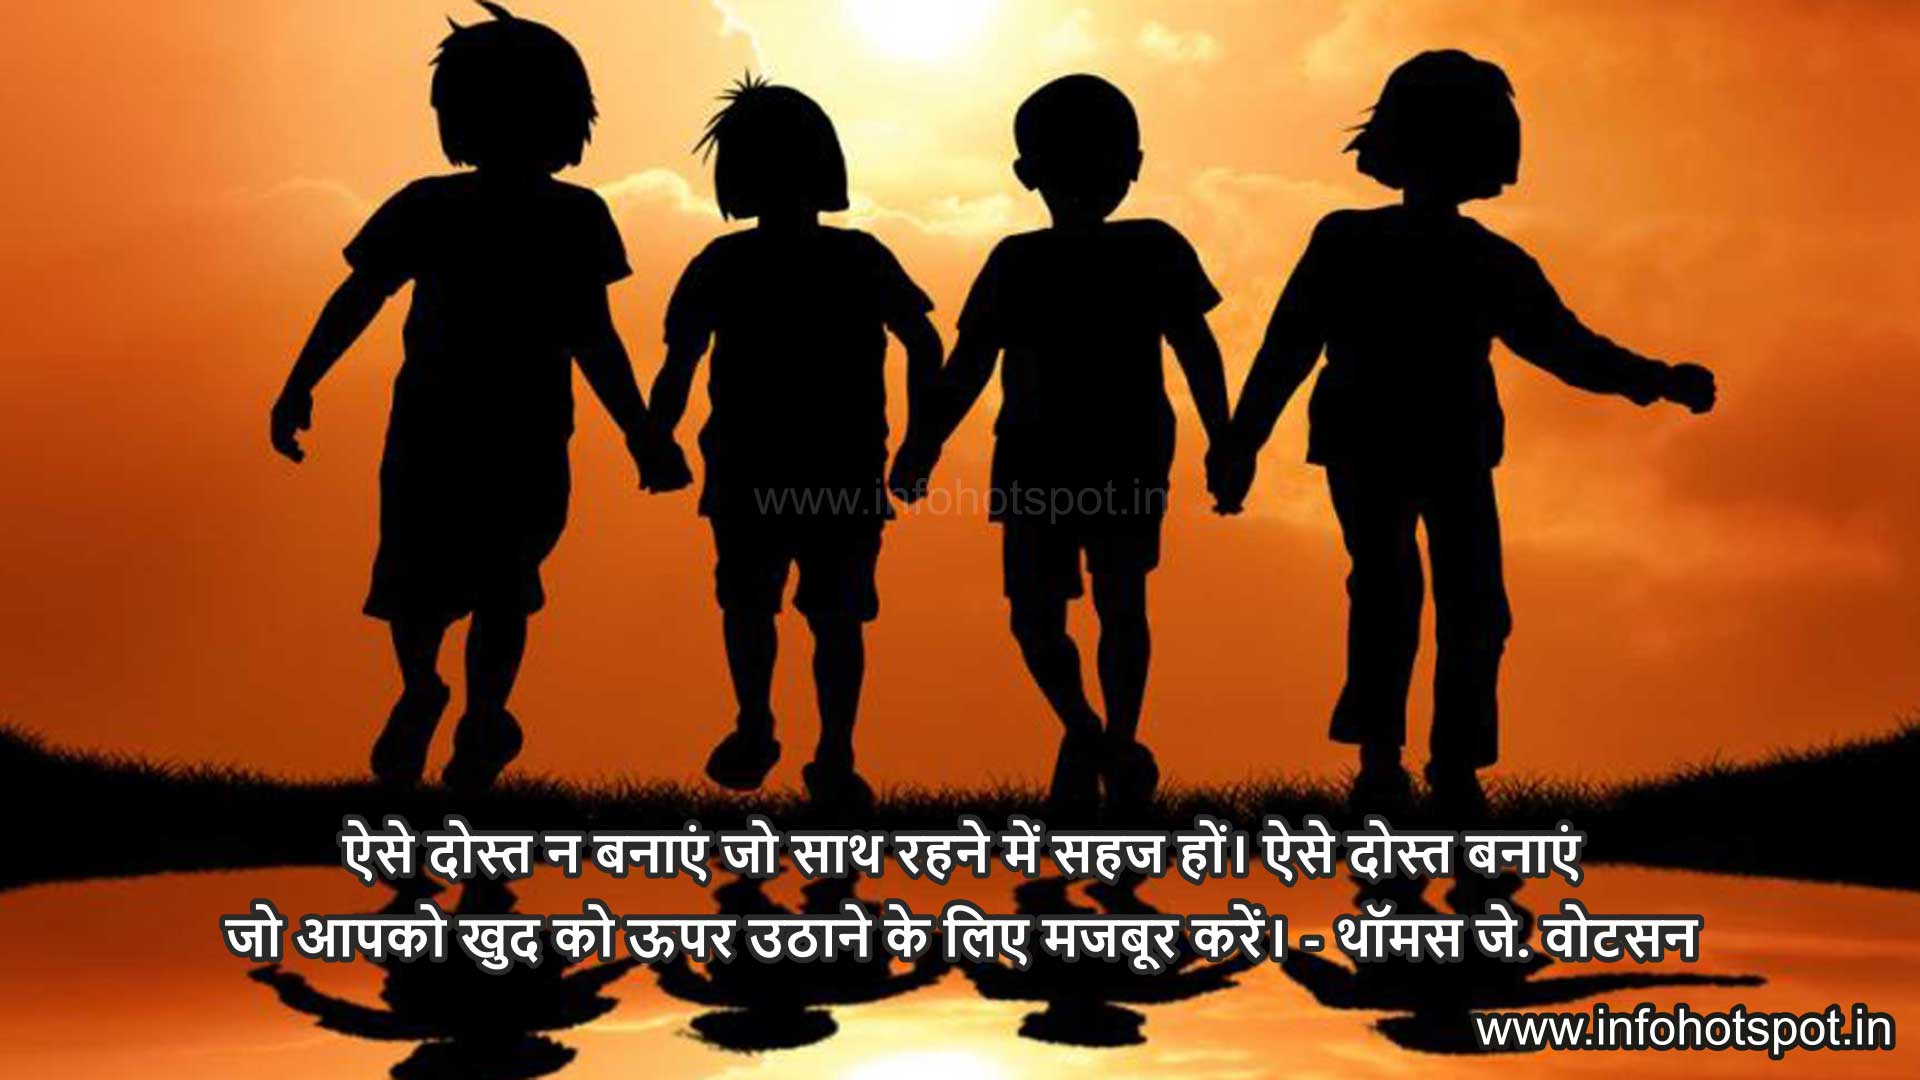 Friendship-Quotes-3-Hindi